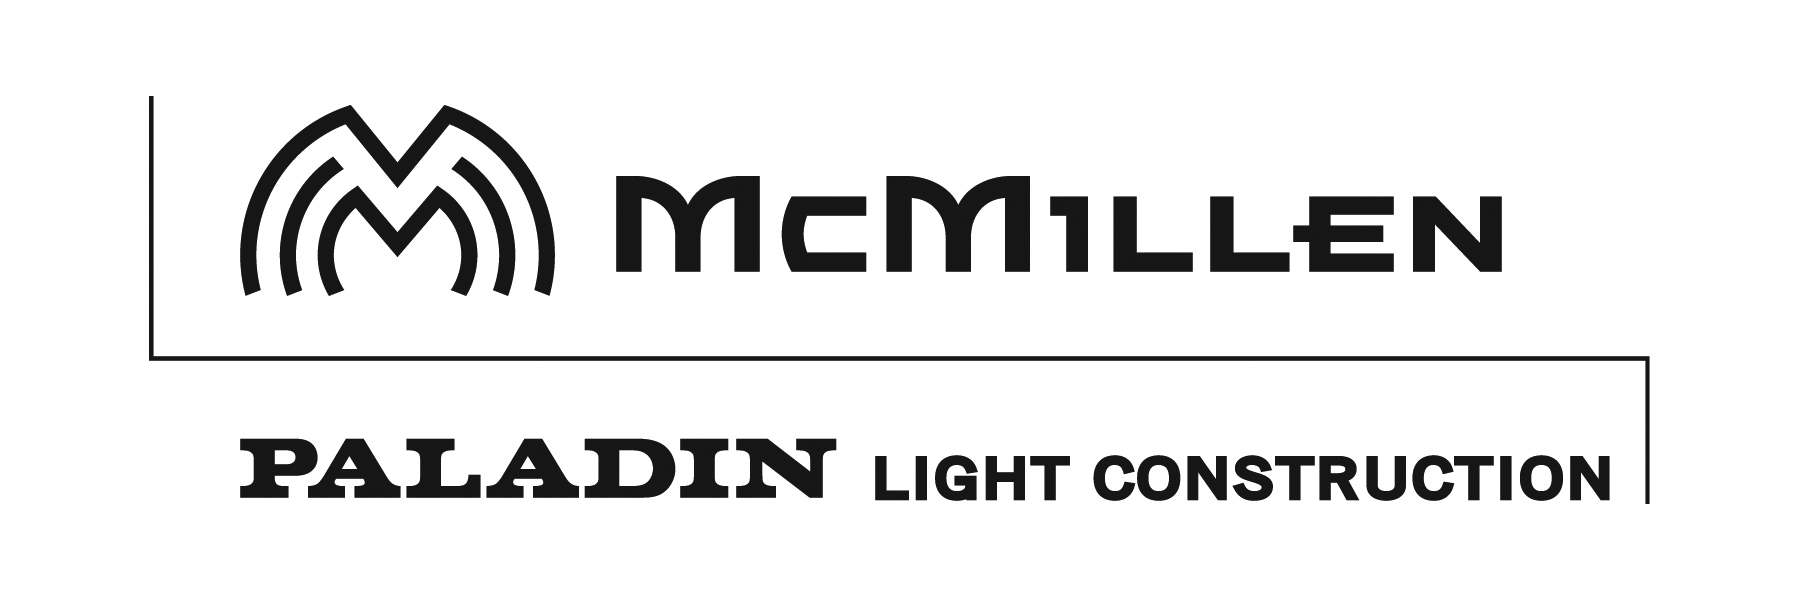  M MCMILLEN PALADIN LIGHT CONSTRUCTION